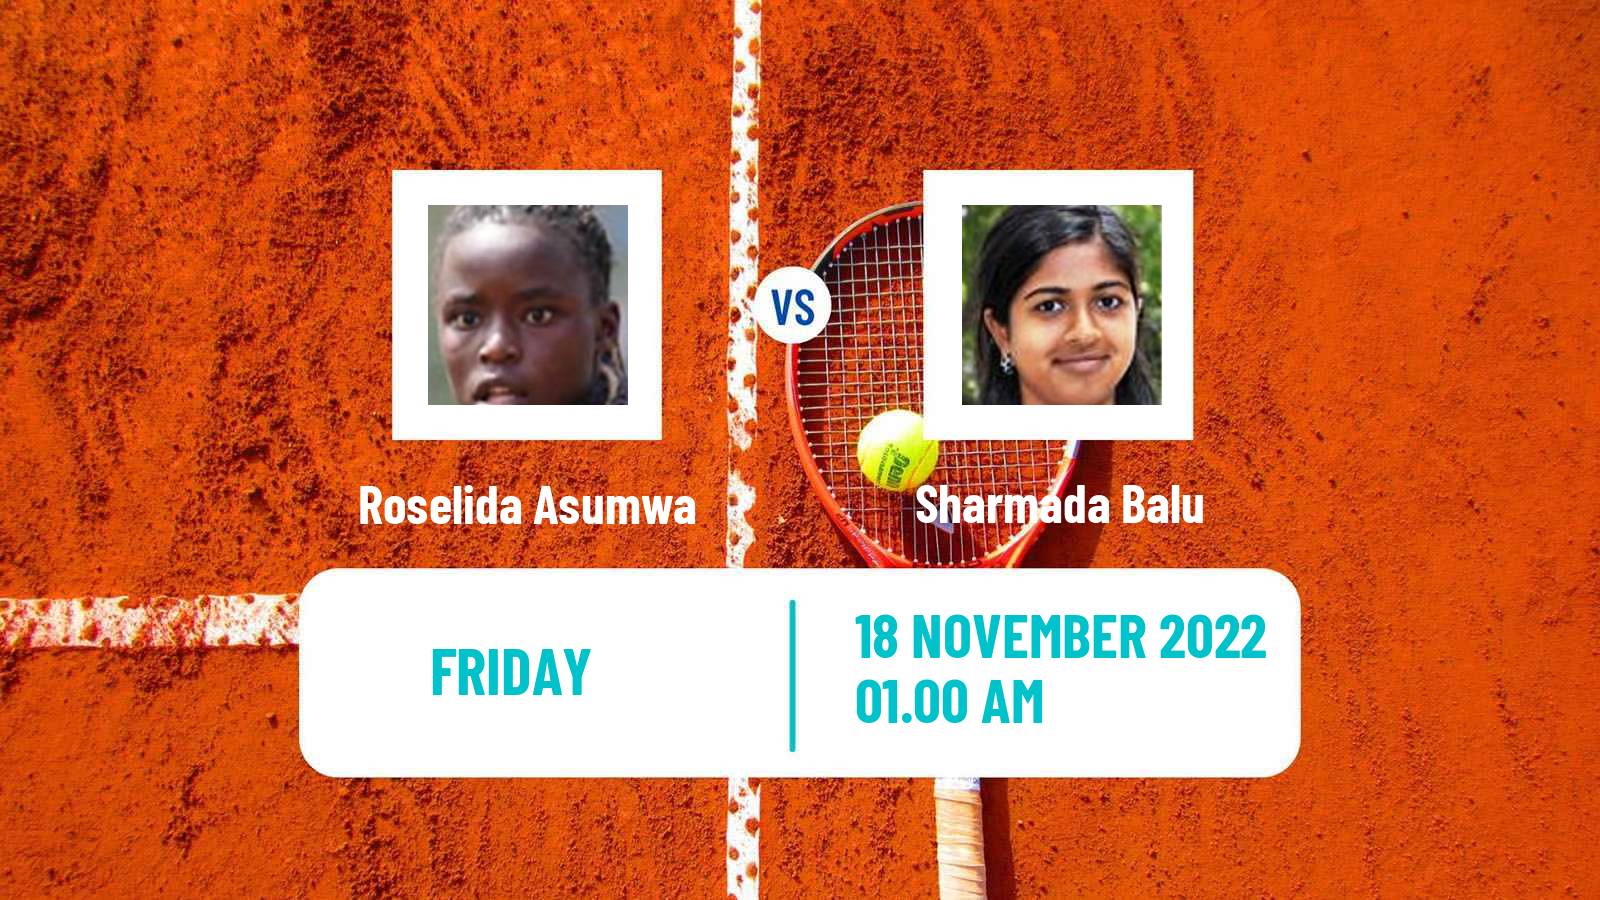 Tennis ITF Tournaments Roselida Asumwa - Sharmada Balu